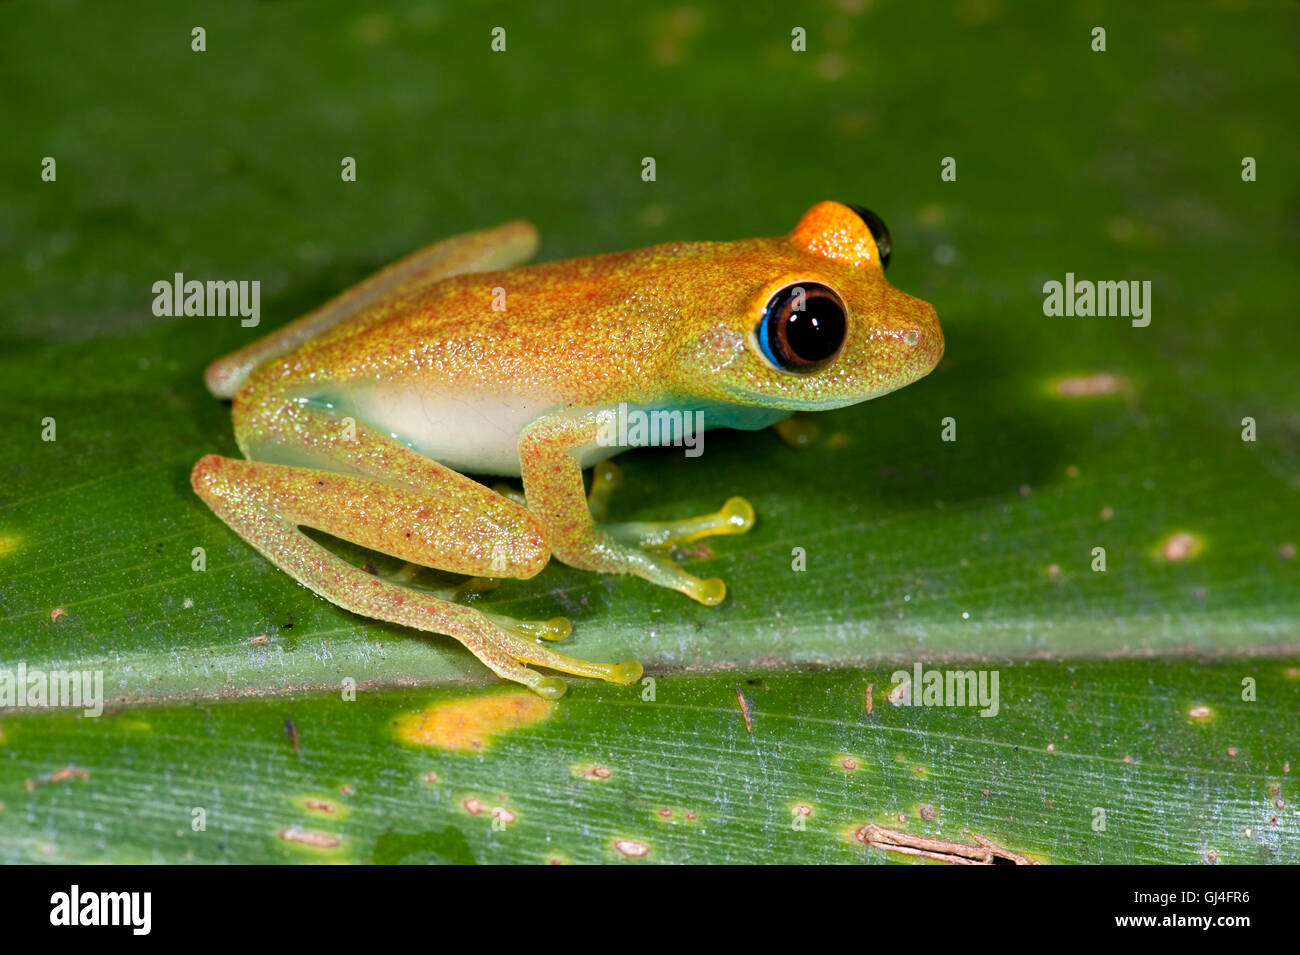 Green Bright Eyed Frog Boophis viridis Madagascar Stock Photo